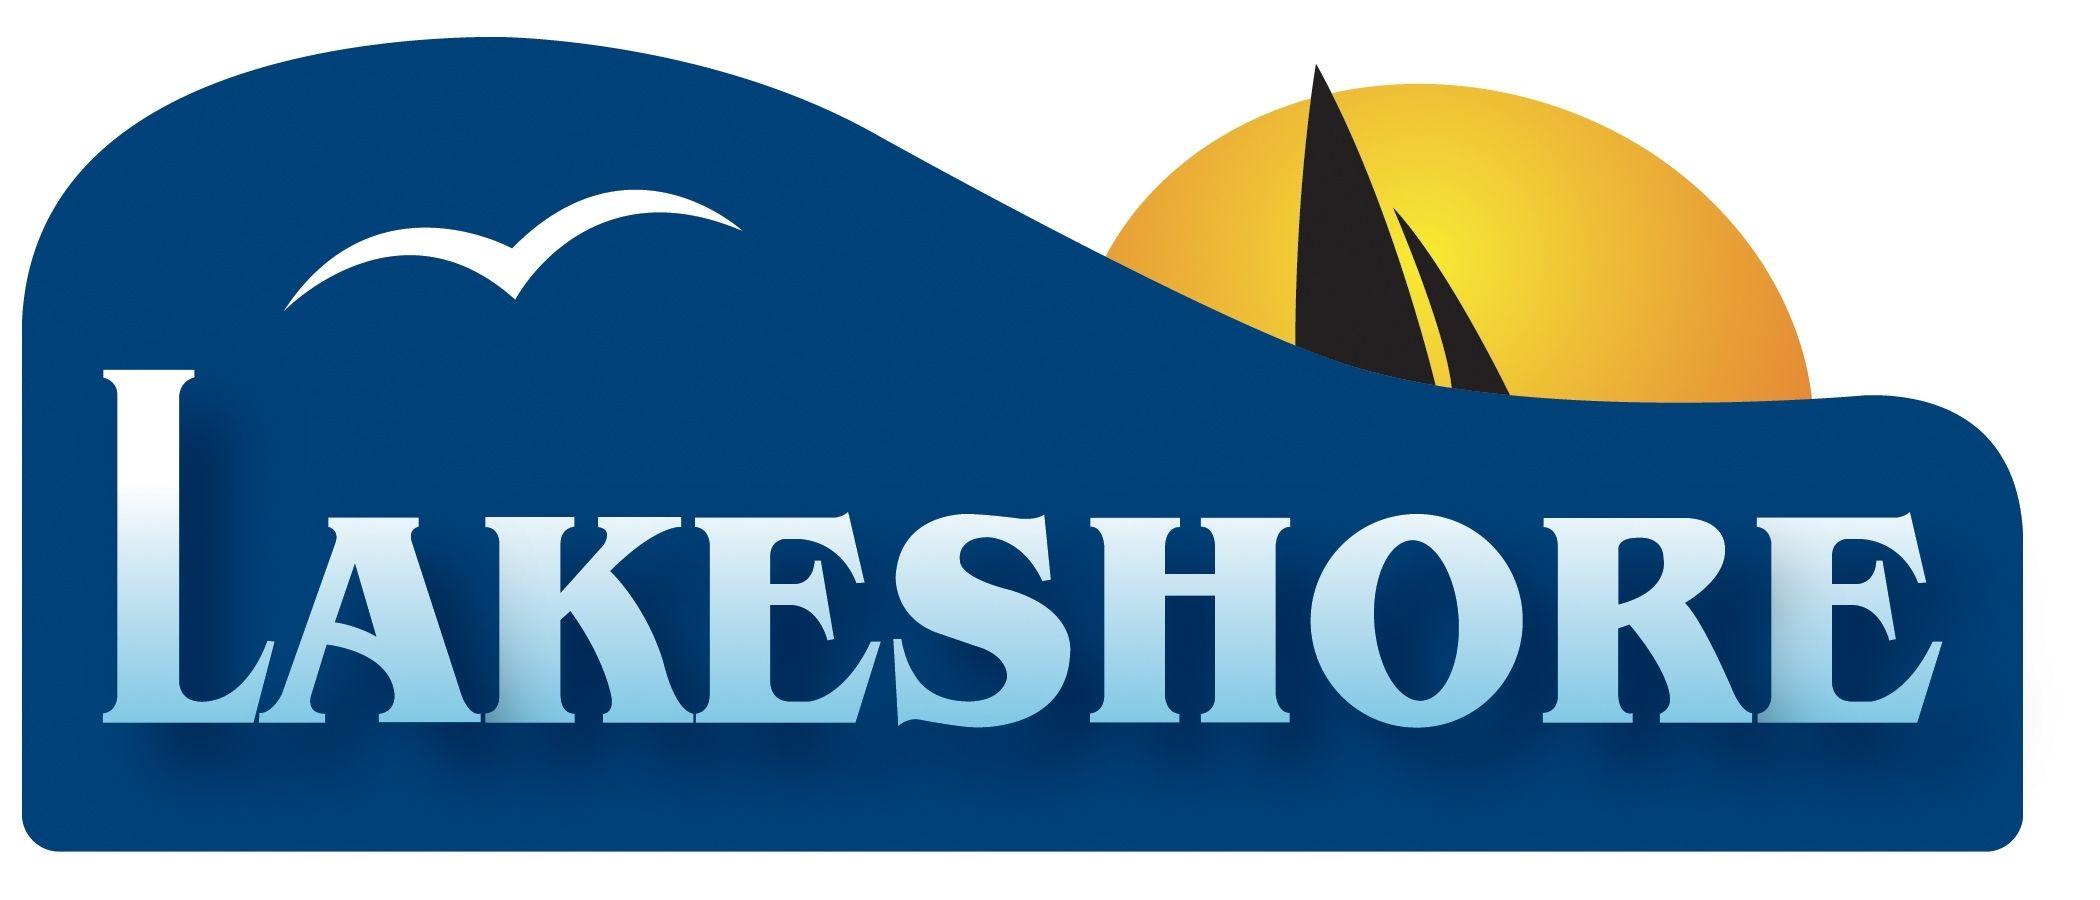 Lakeshore Logo - Lakeshore Paths and Trails